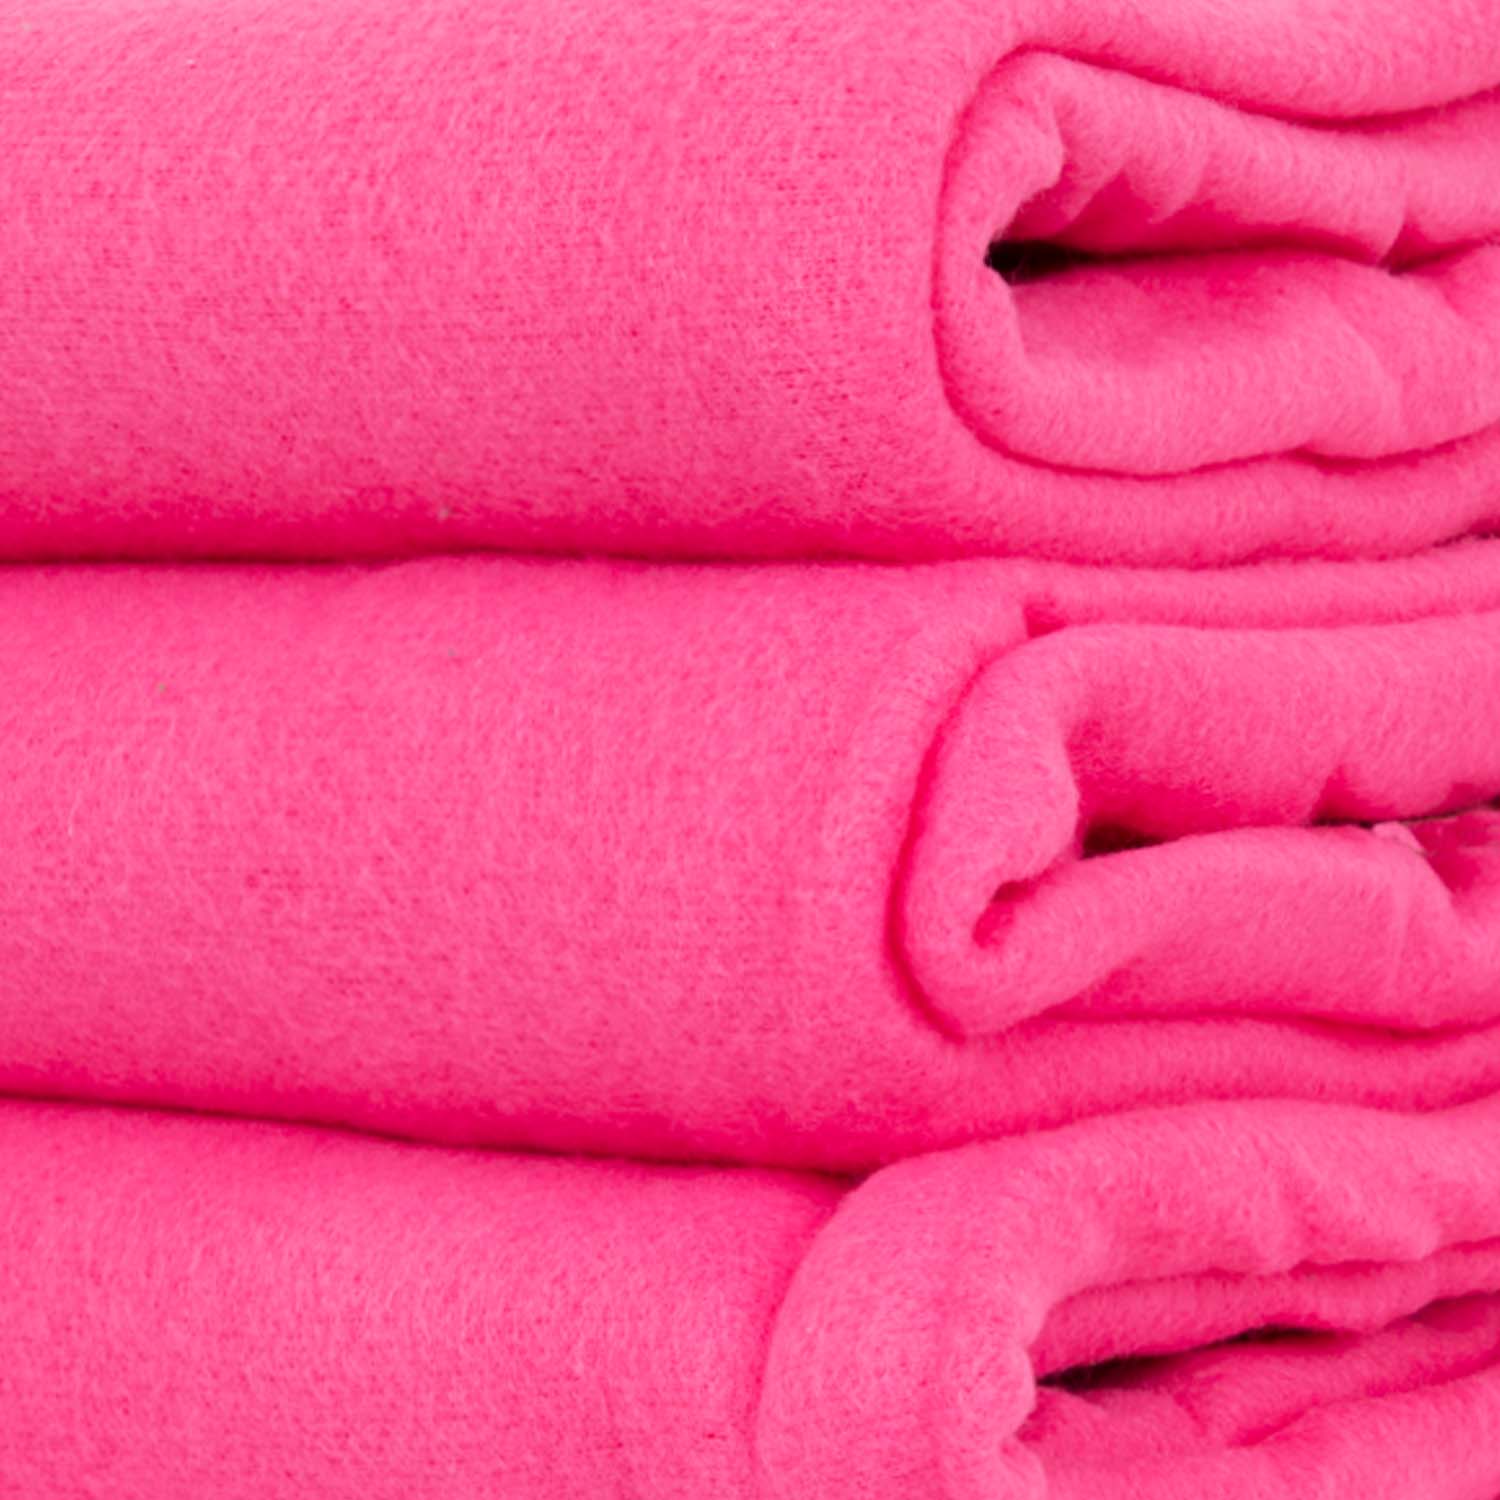 Soft Polar Fleece Throw Blankets - Color Options - 50x60: Beige